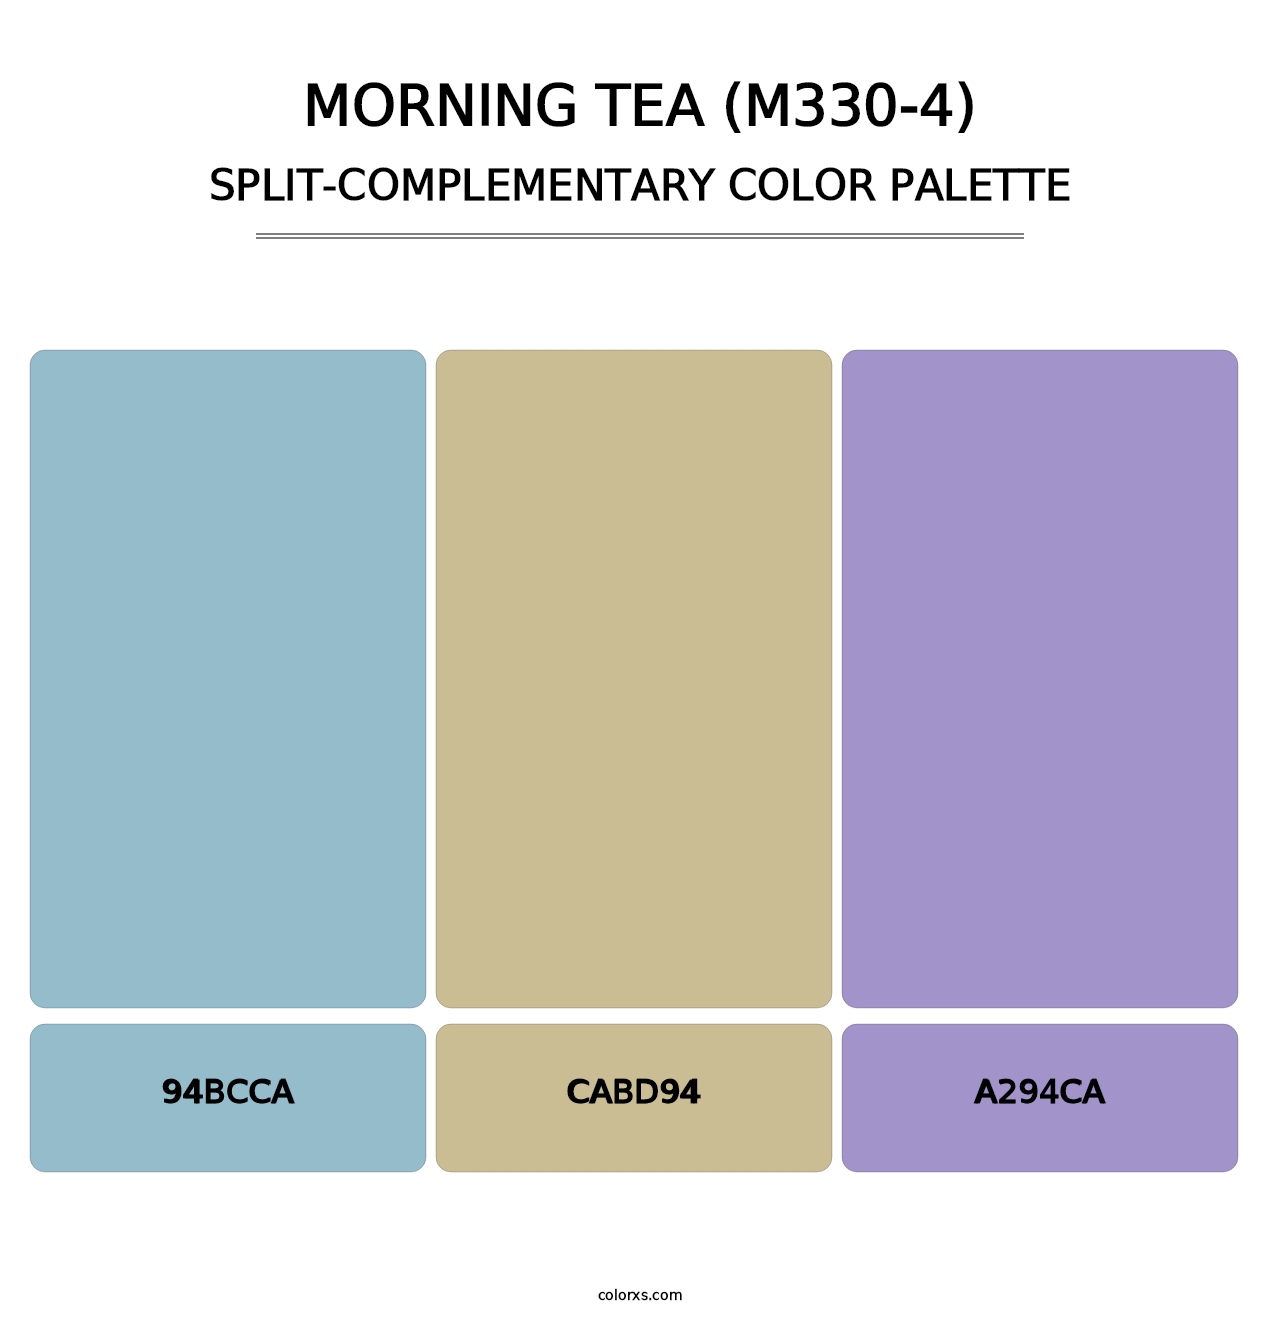 Morning Tea (M330-4) - Split-Complementary Color Palette